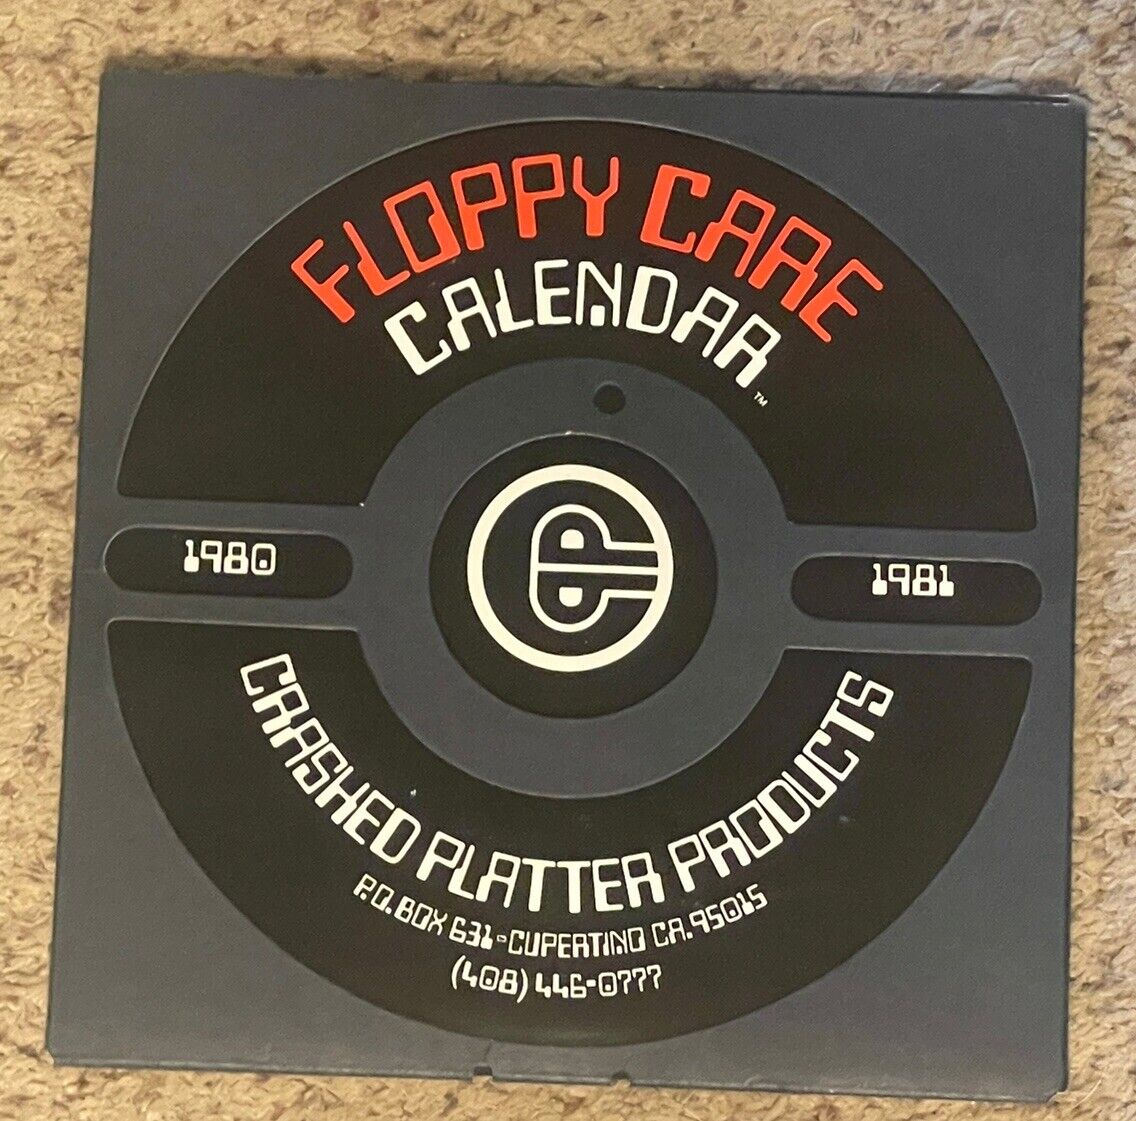 Vintage 1980 Floppy Care Calendar, Crashed Platter Products, Computer Related